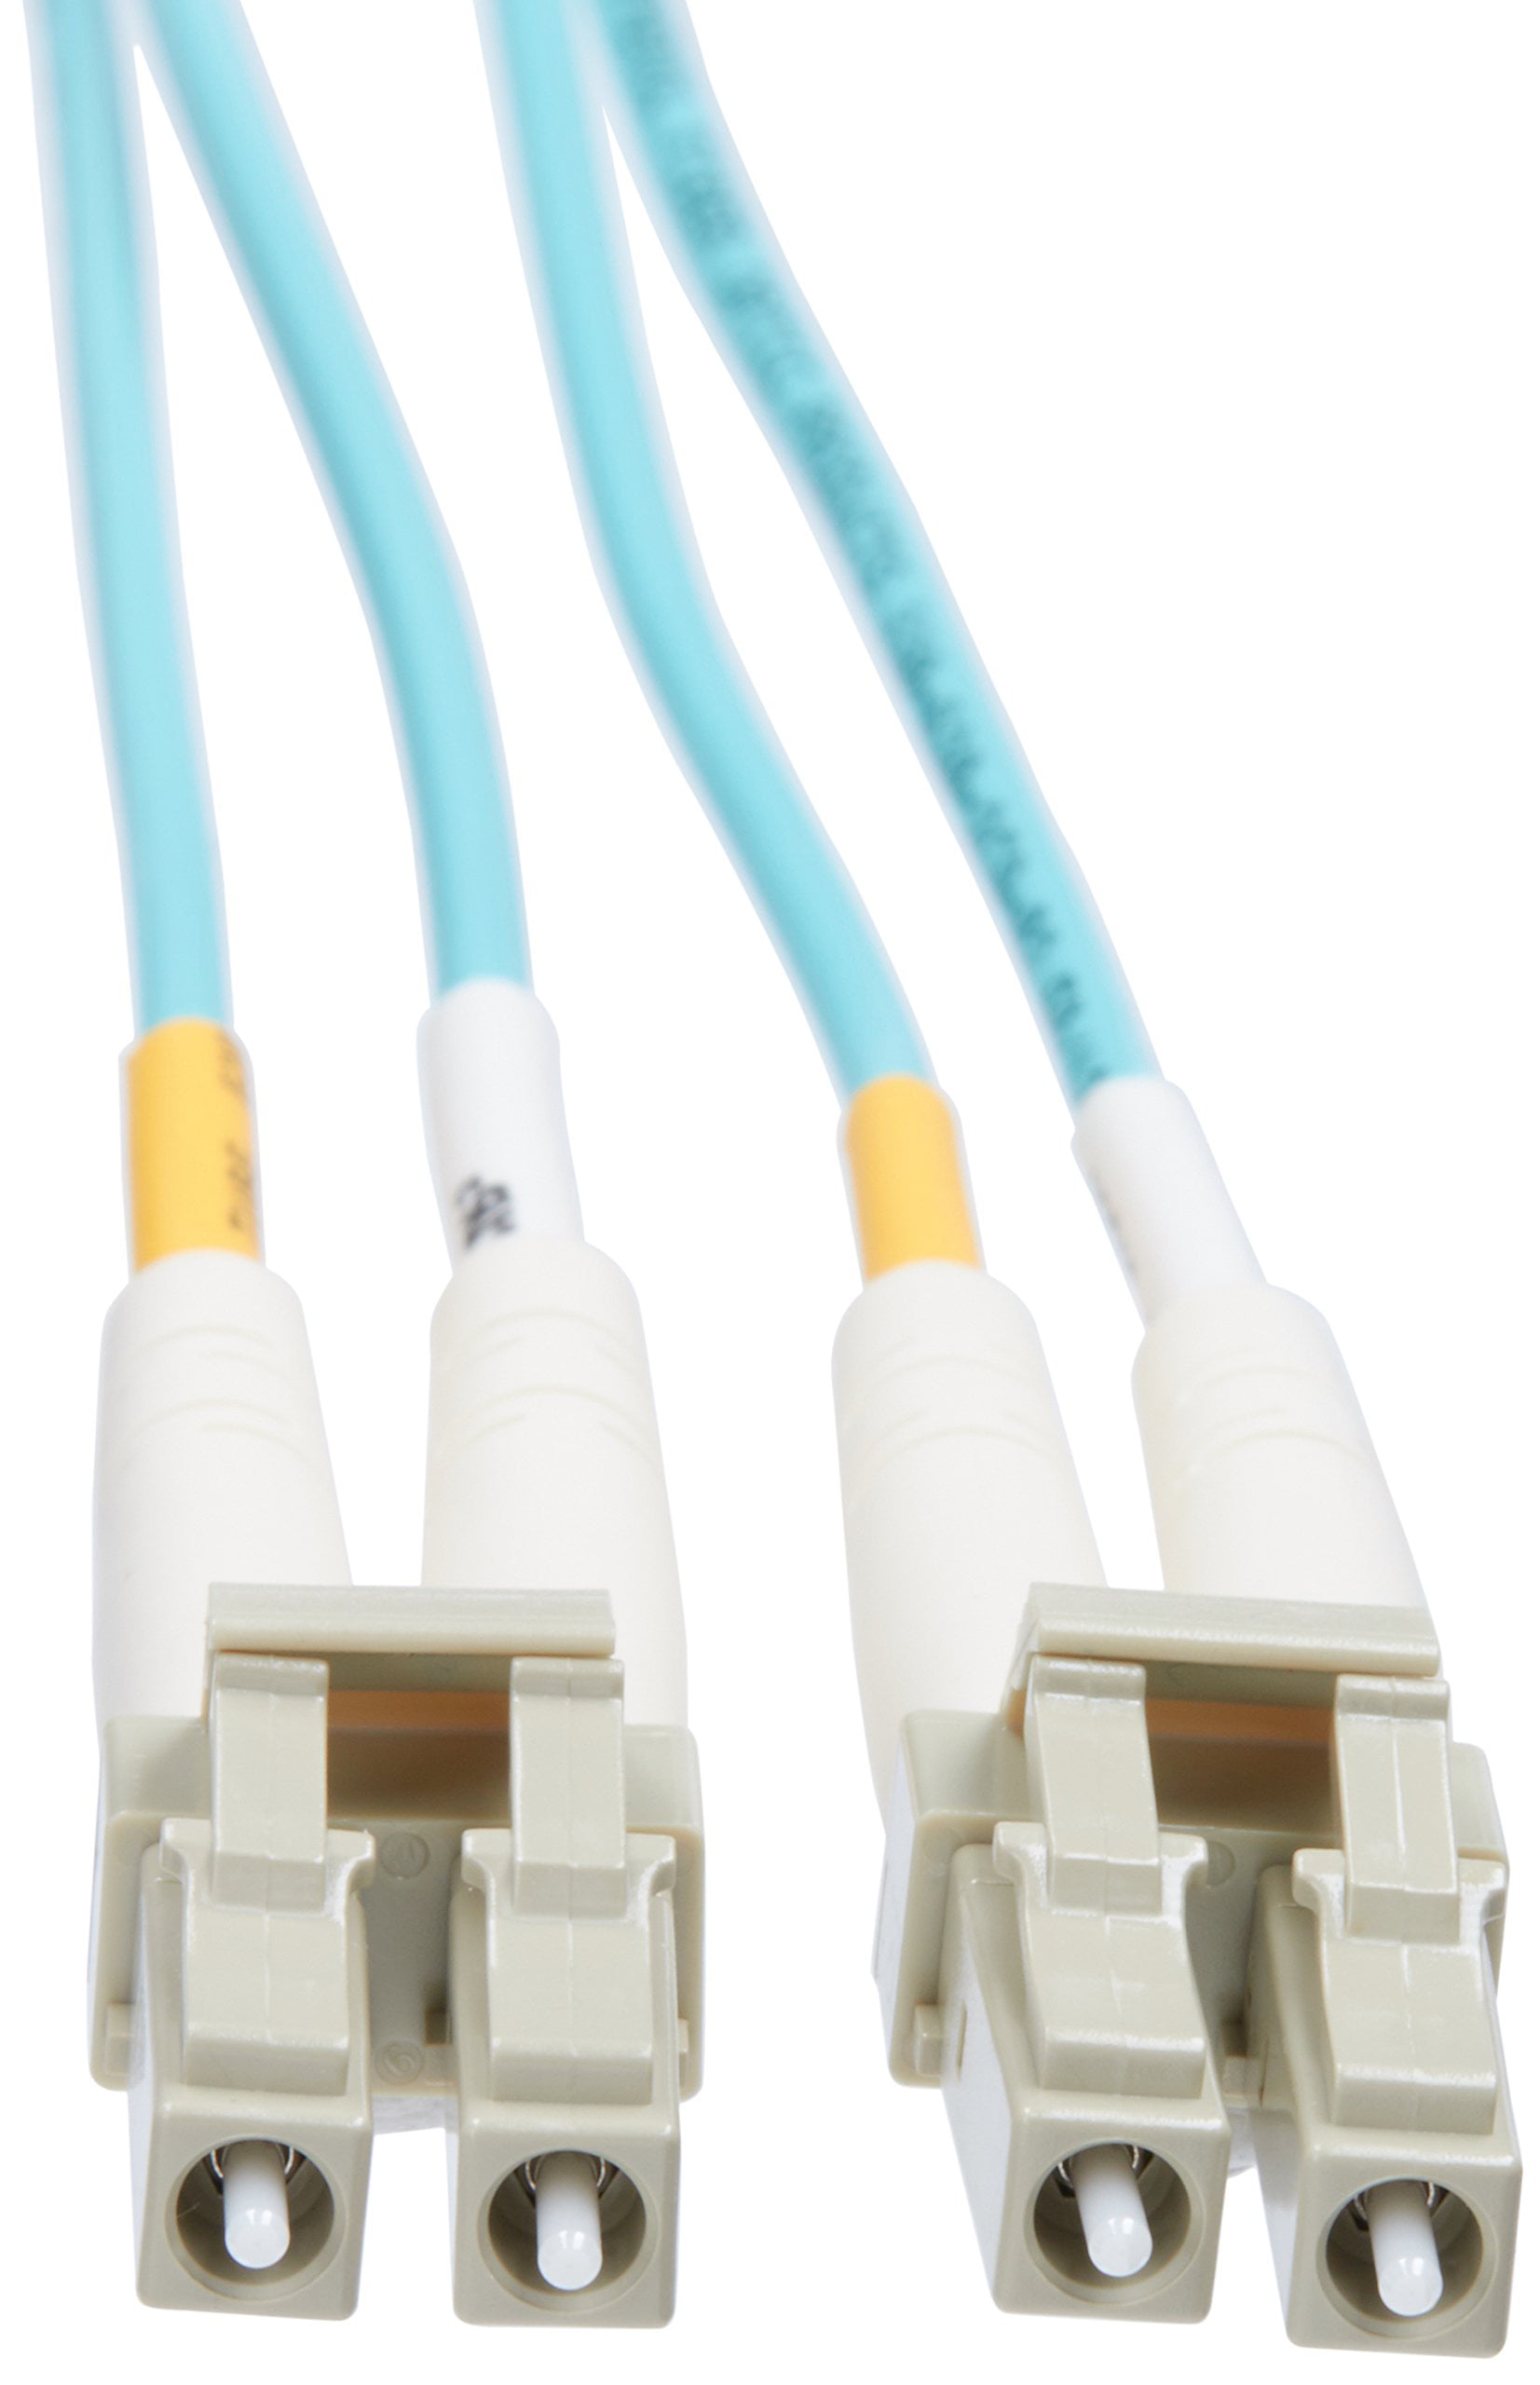 HPE Fibre Channel Cable LC-LC Multi-Mode OM3 0,5m